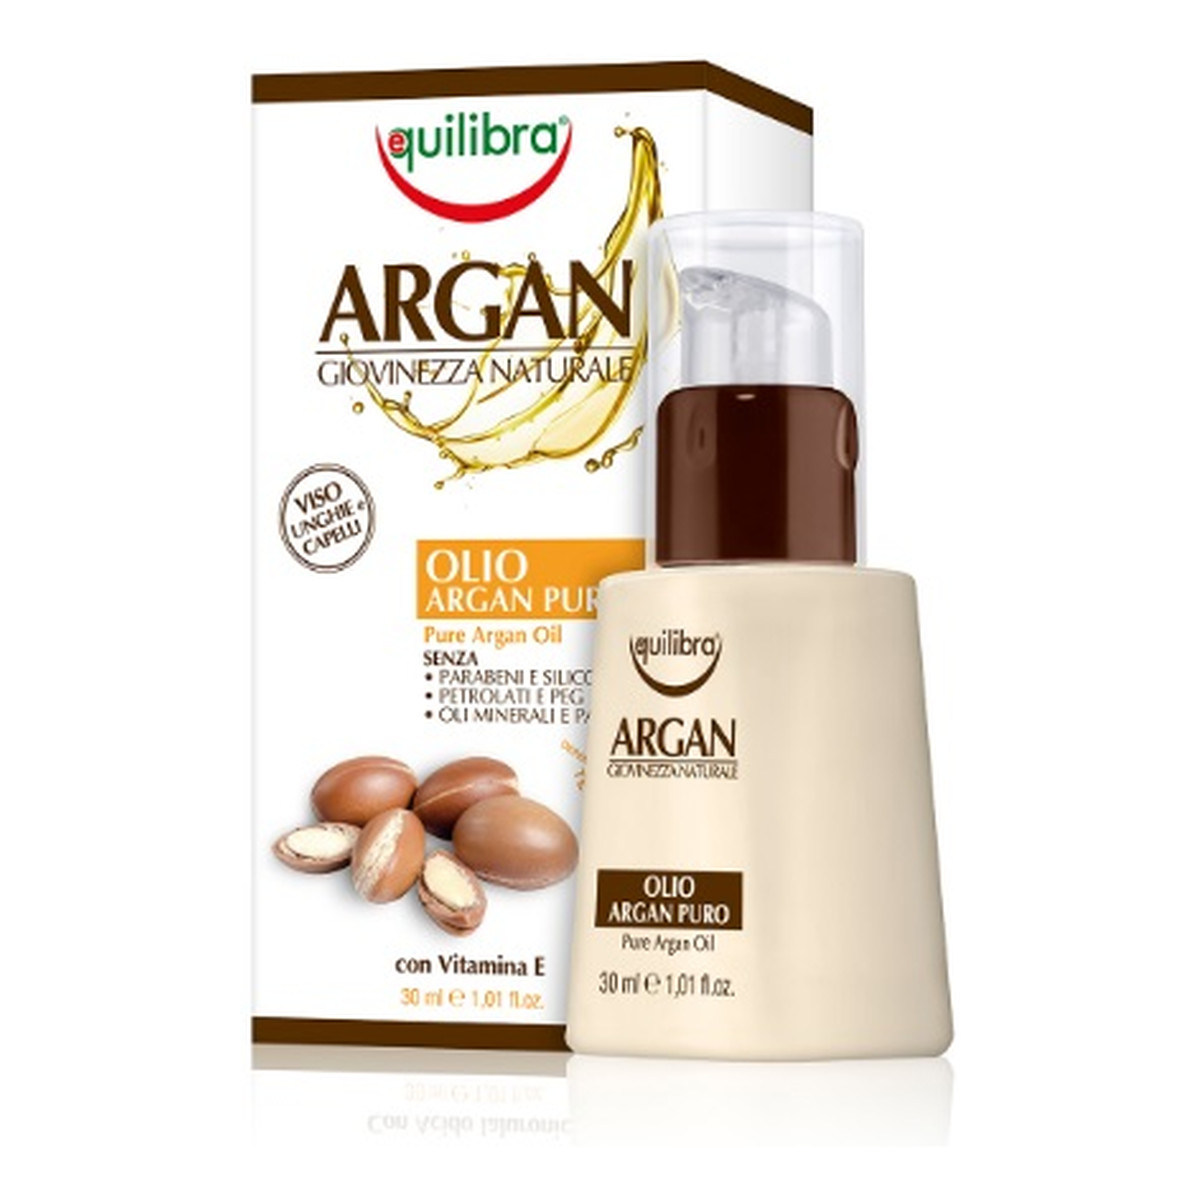 Equilibra Argan czysty olejek arganowy 30ml